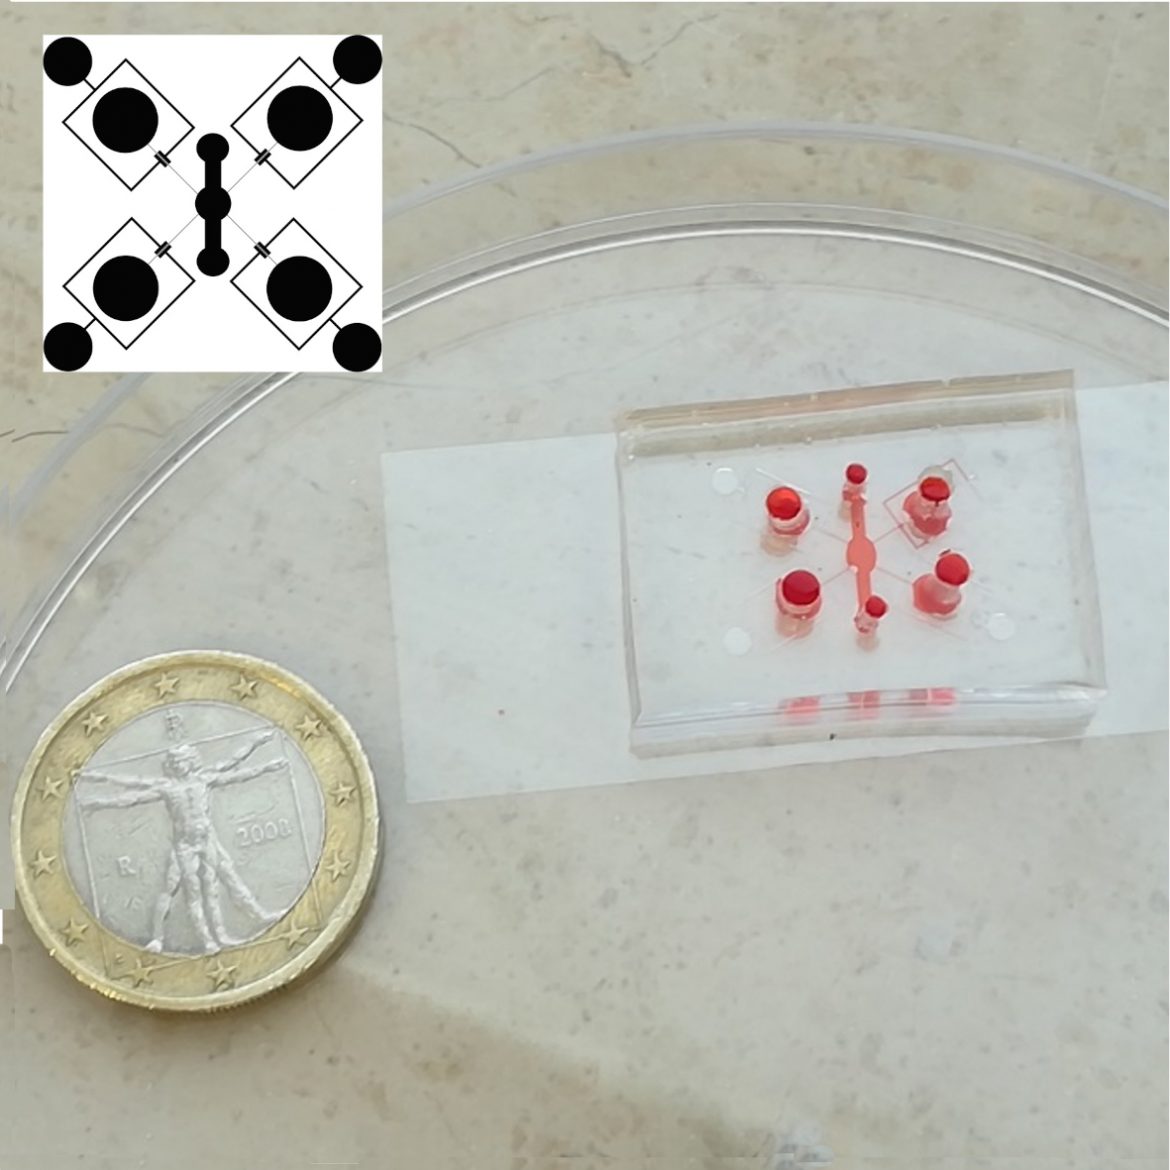 Microfluidic platforms for sensing applications: design and fabrication